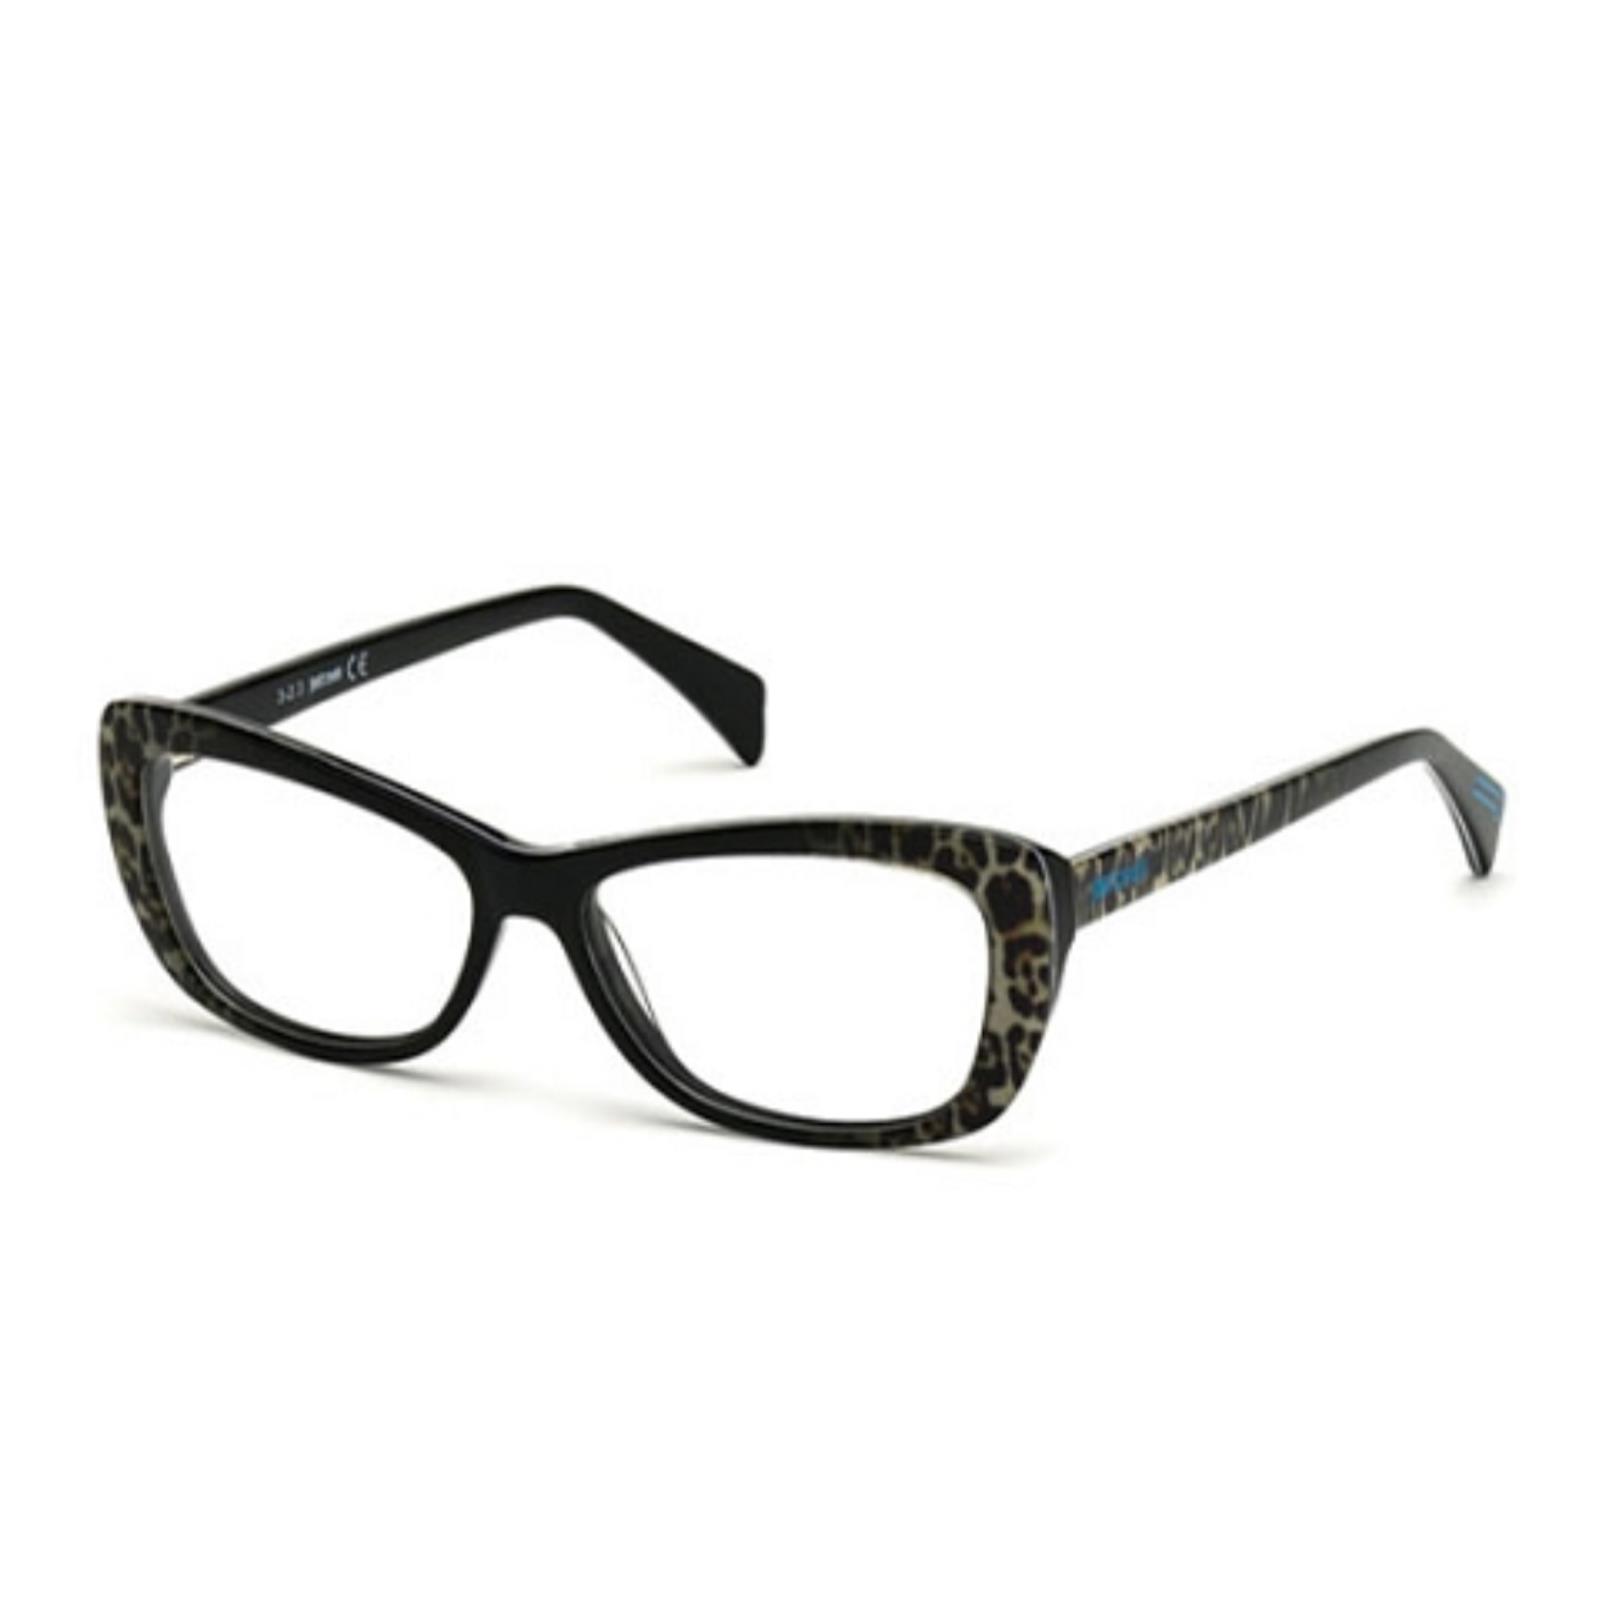 Just Cavalli Eyeglasses JC0602 005 53-14 140 Black Leopard Cat-eye Frames